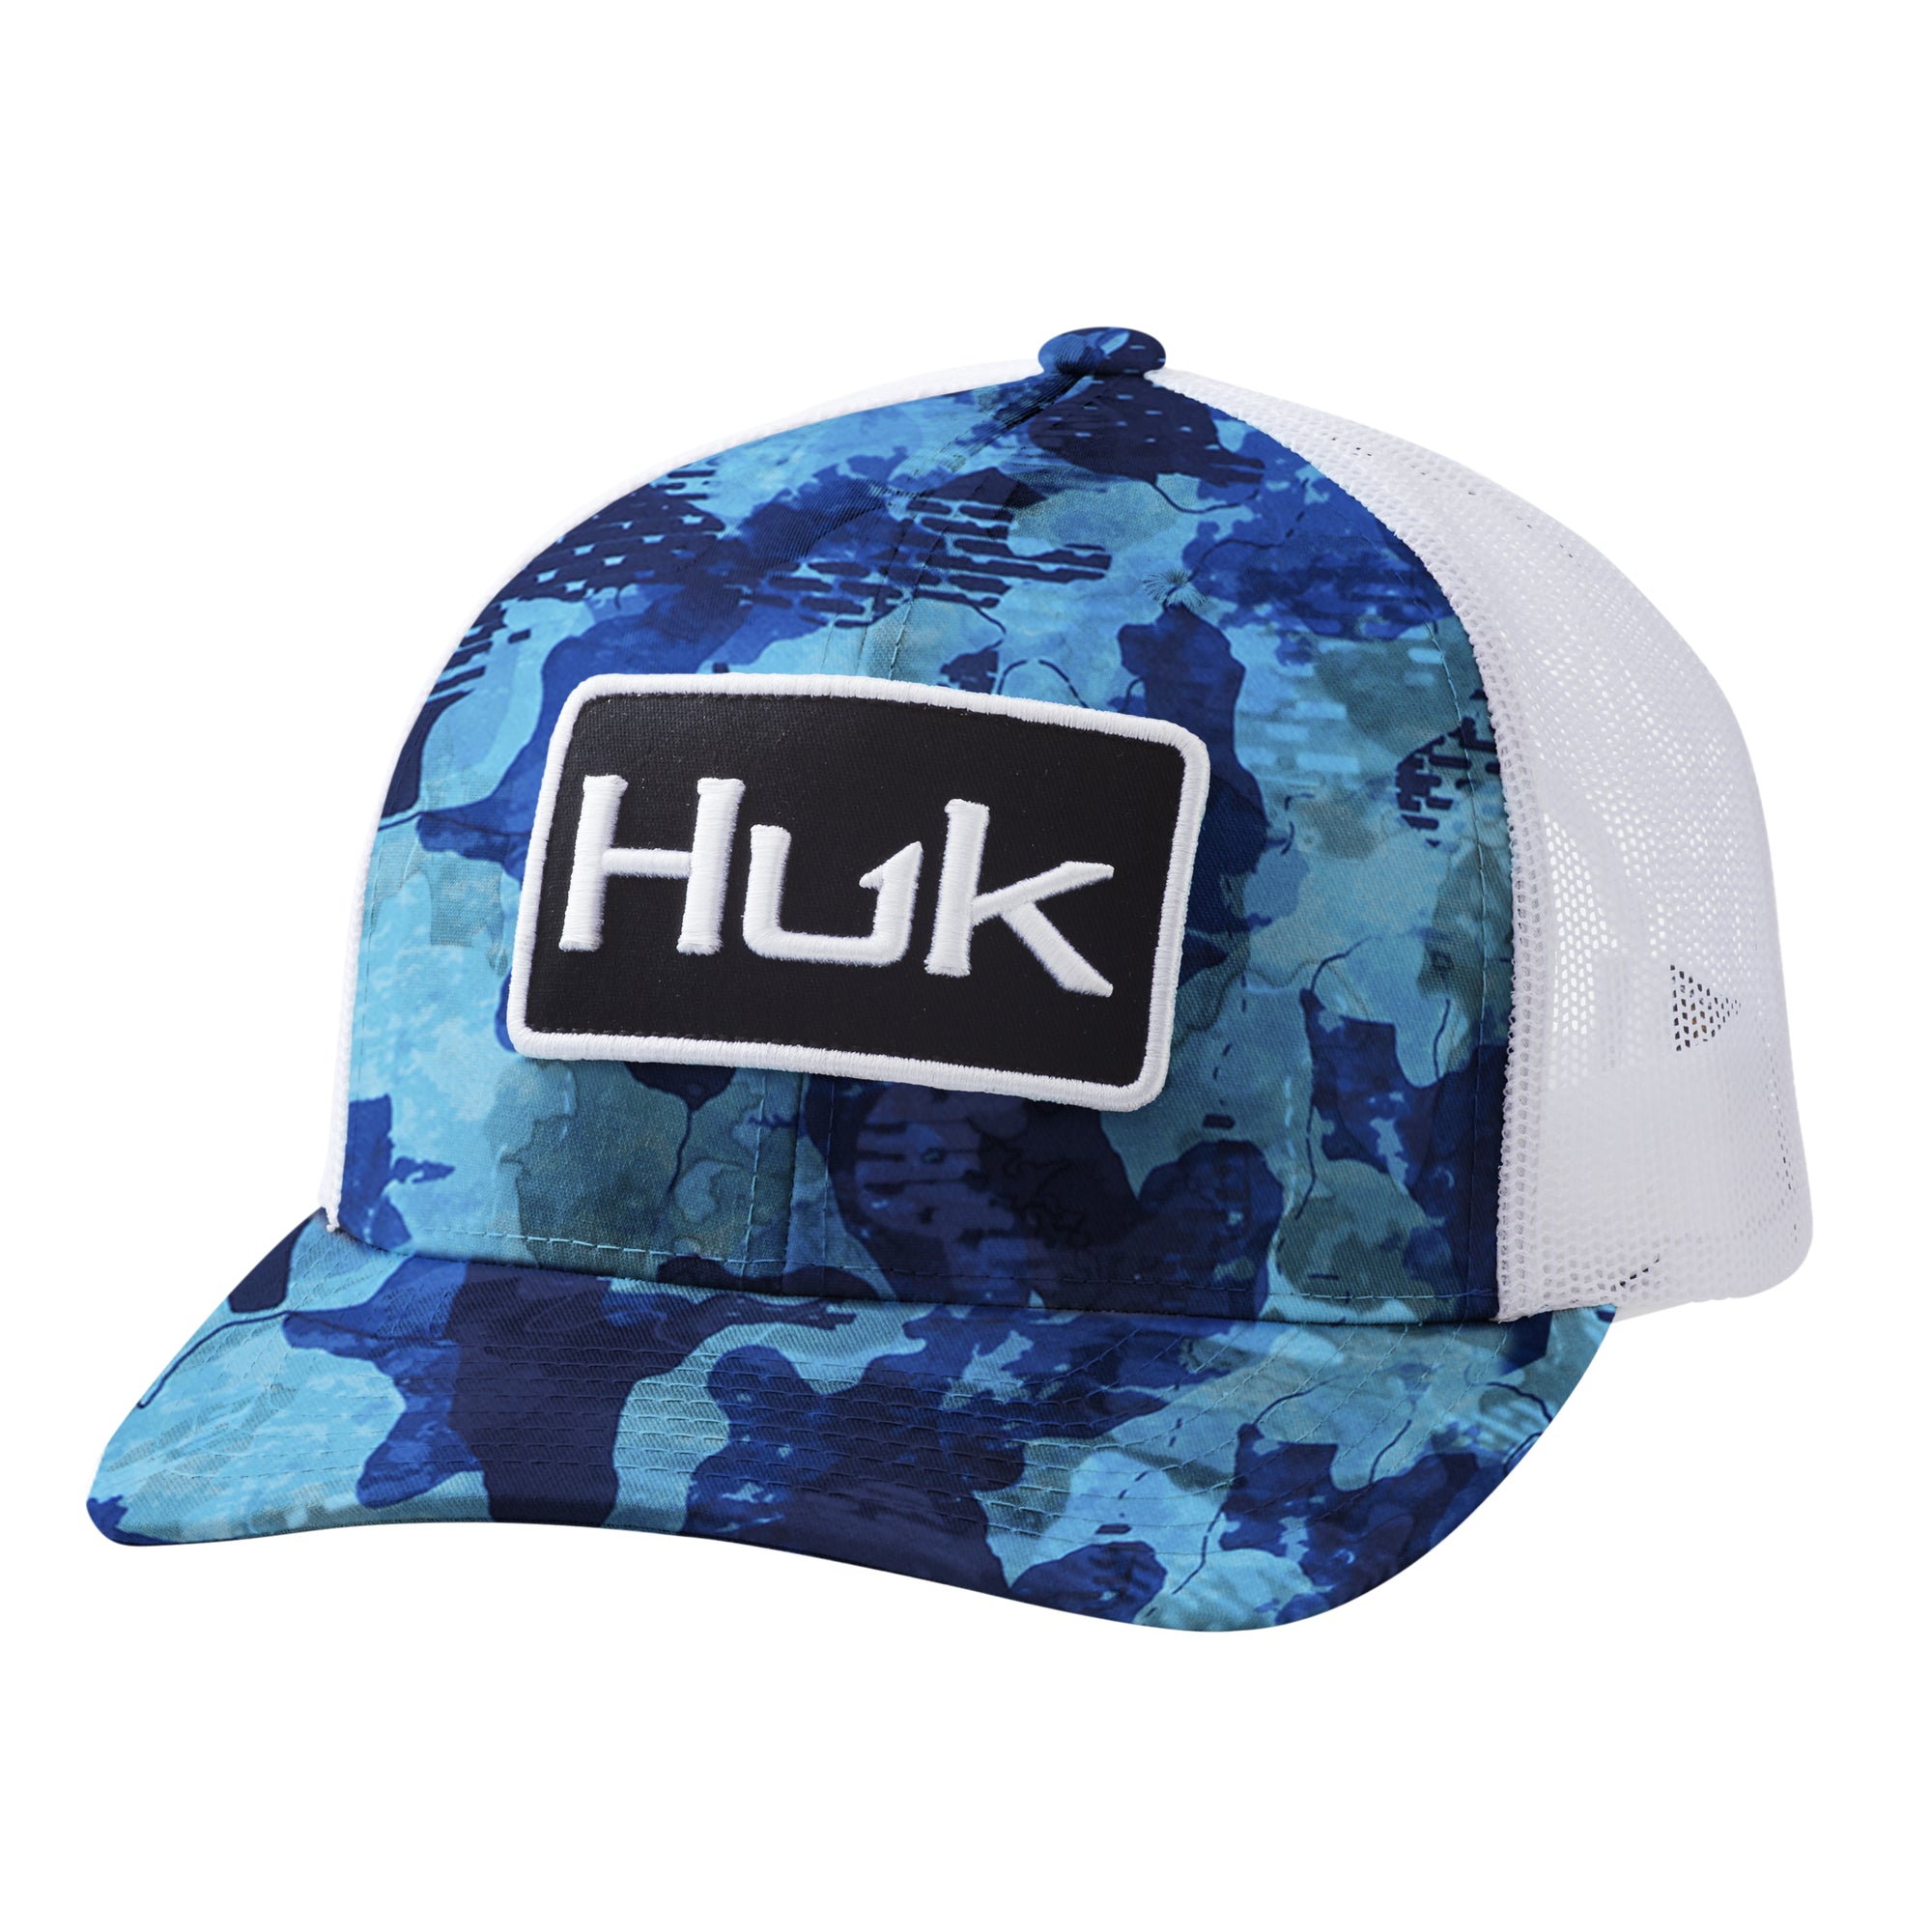 Huk Huk'd Up Refraction Fishing Hat SAN SAL